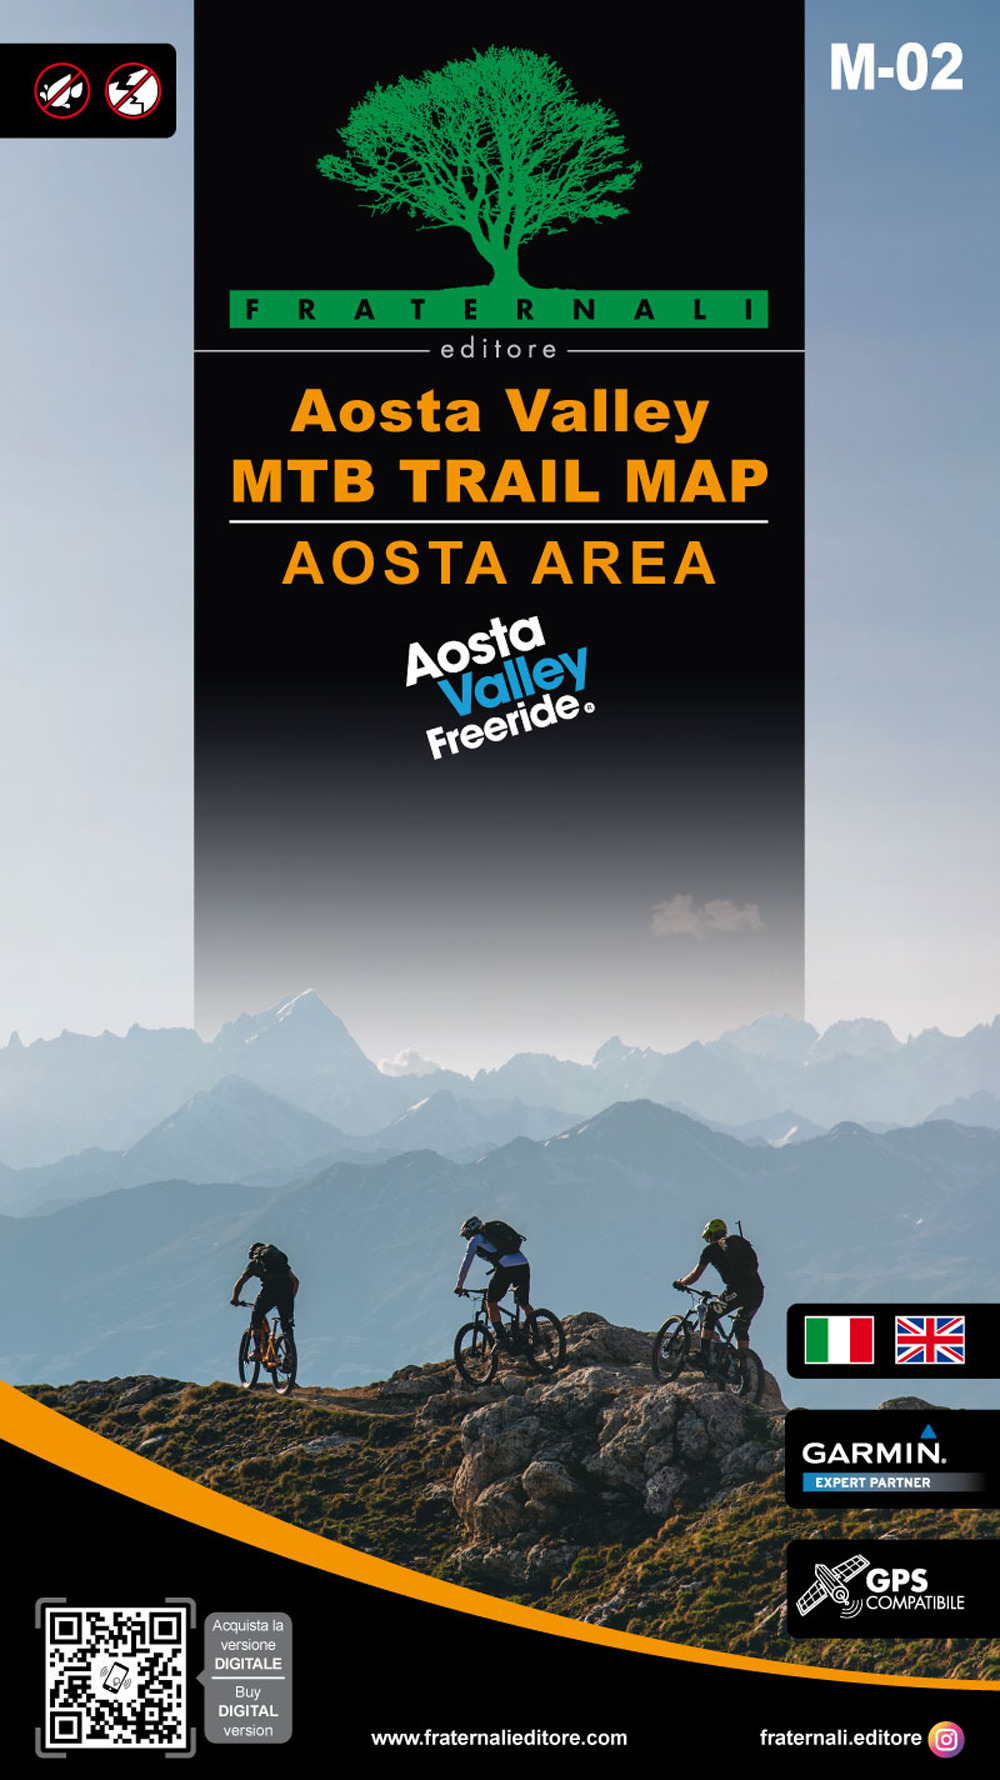 Aosta Valley. Aosta area. MTB trail map. Ediz. italiana e inglese